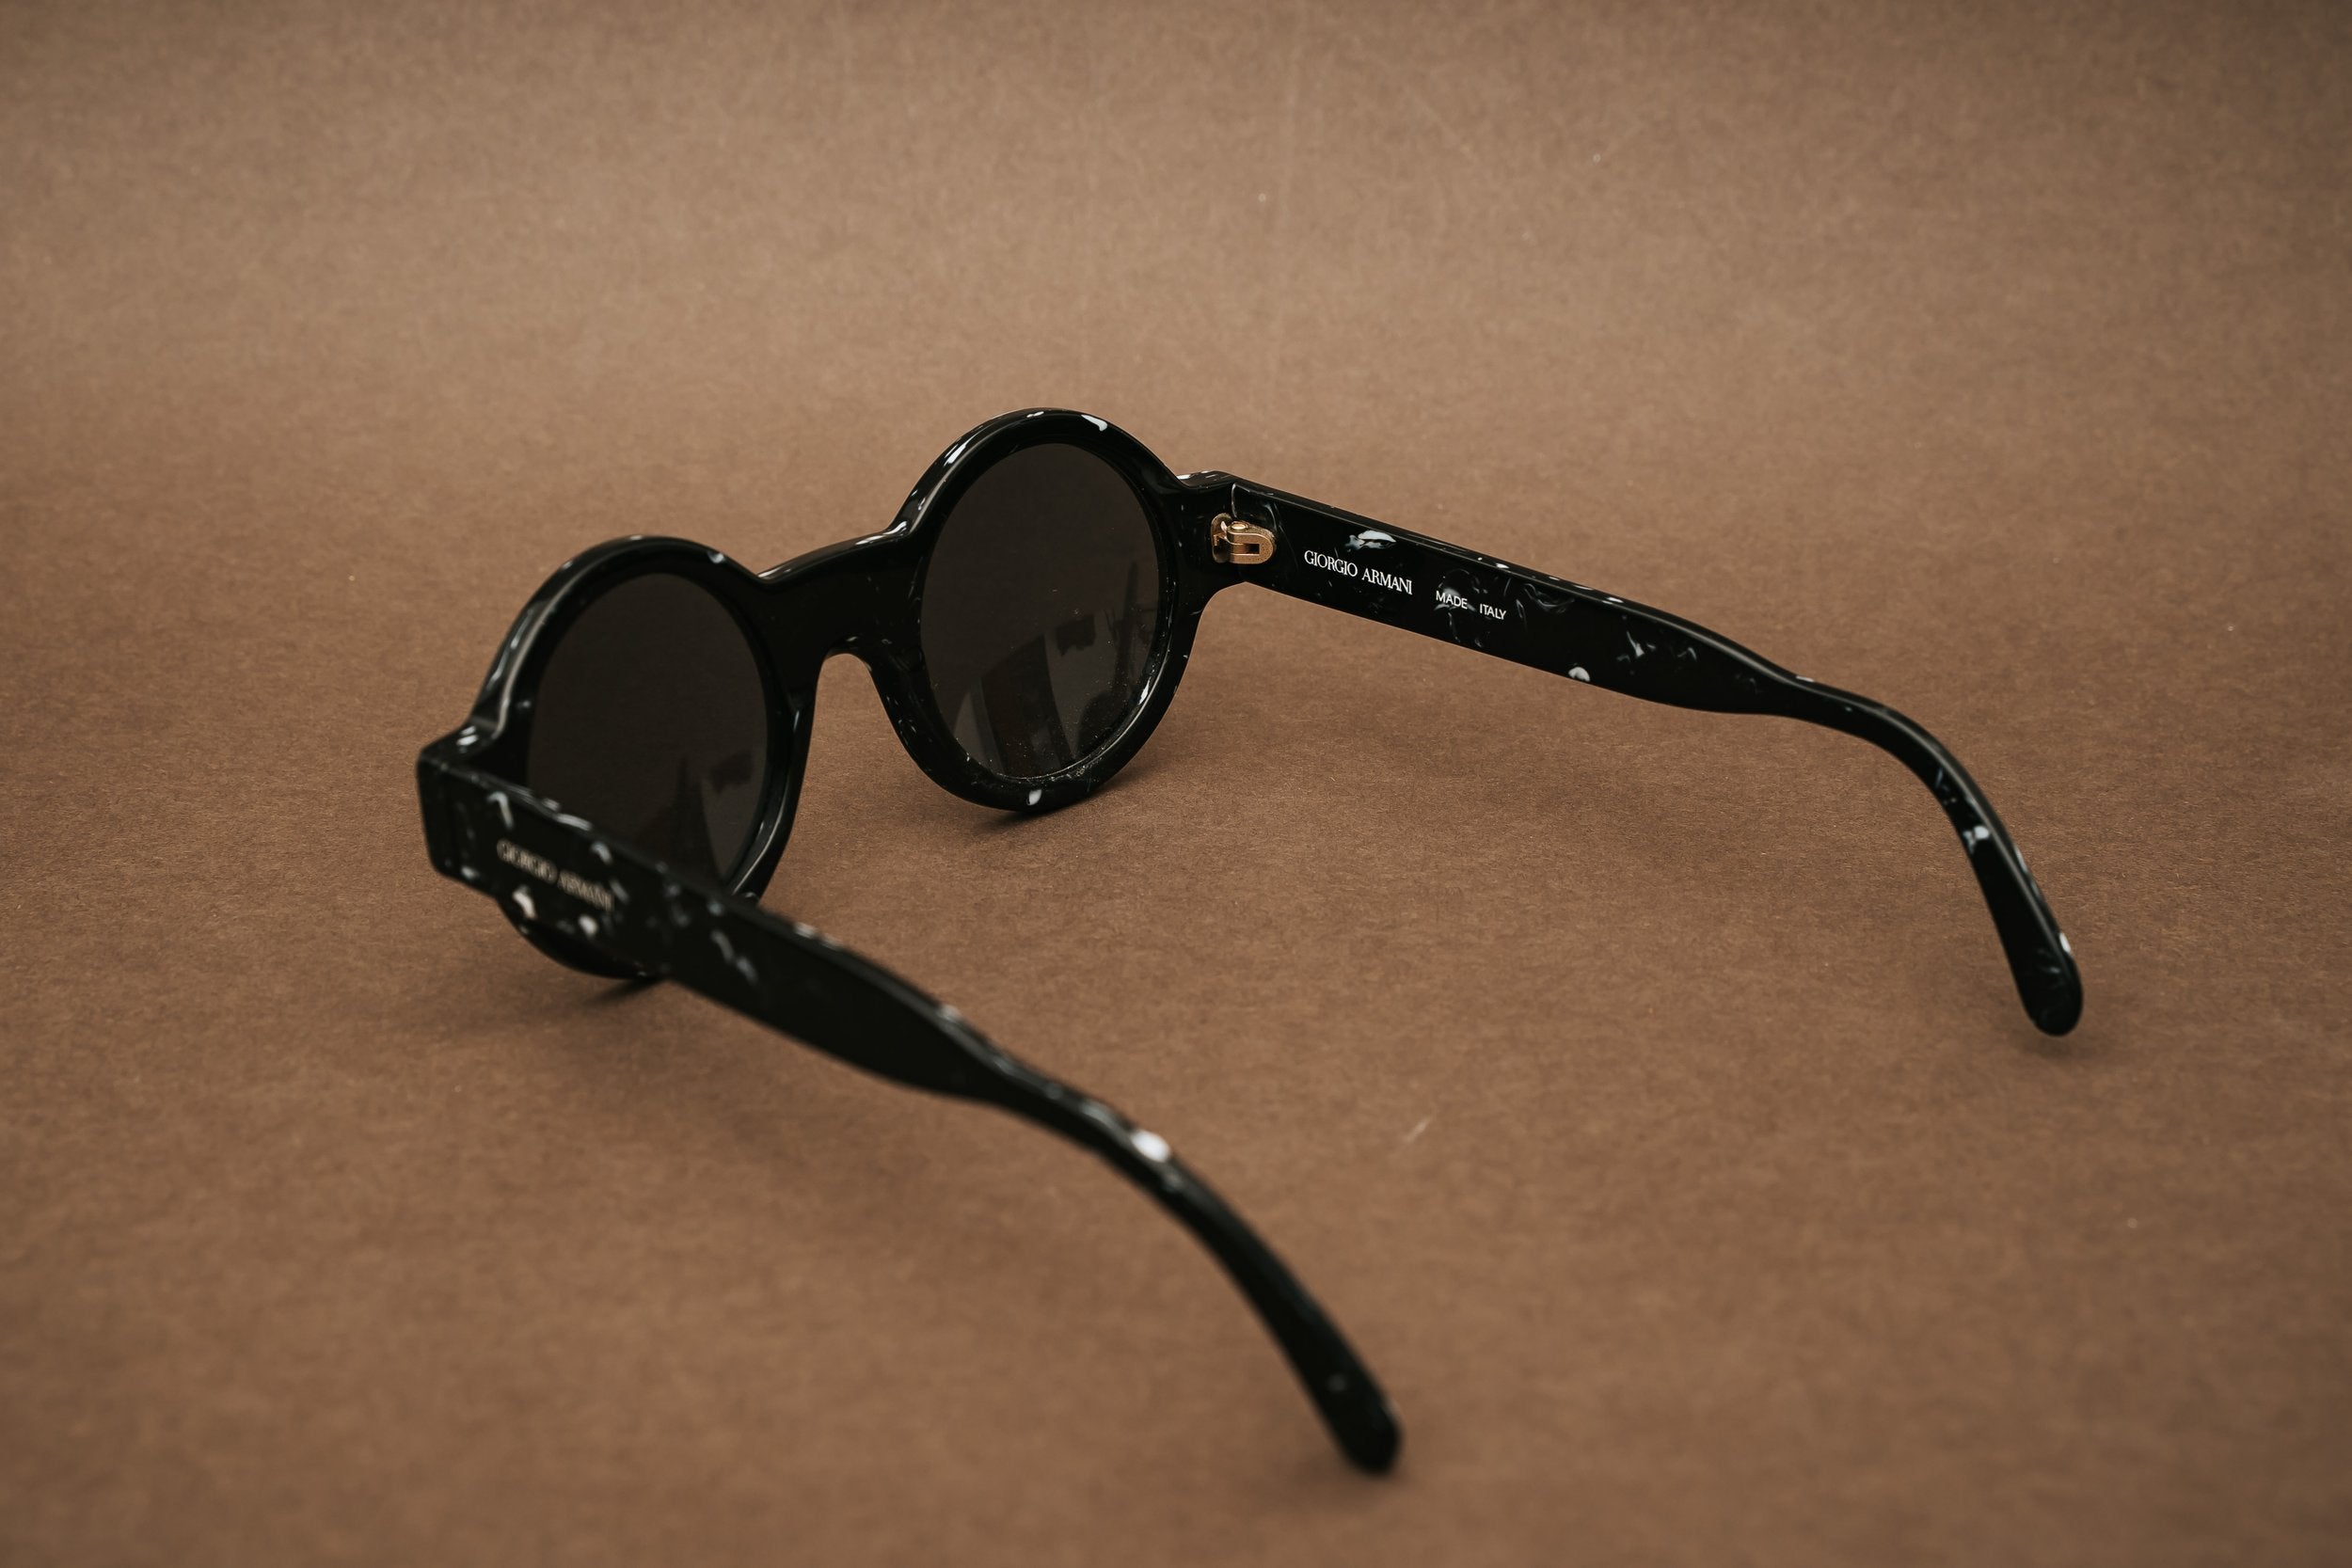 Giorgio Armani 903 sunglasses